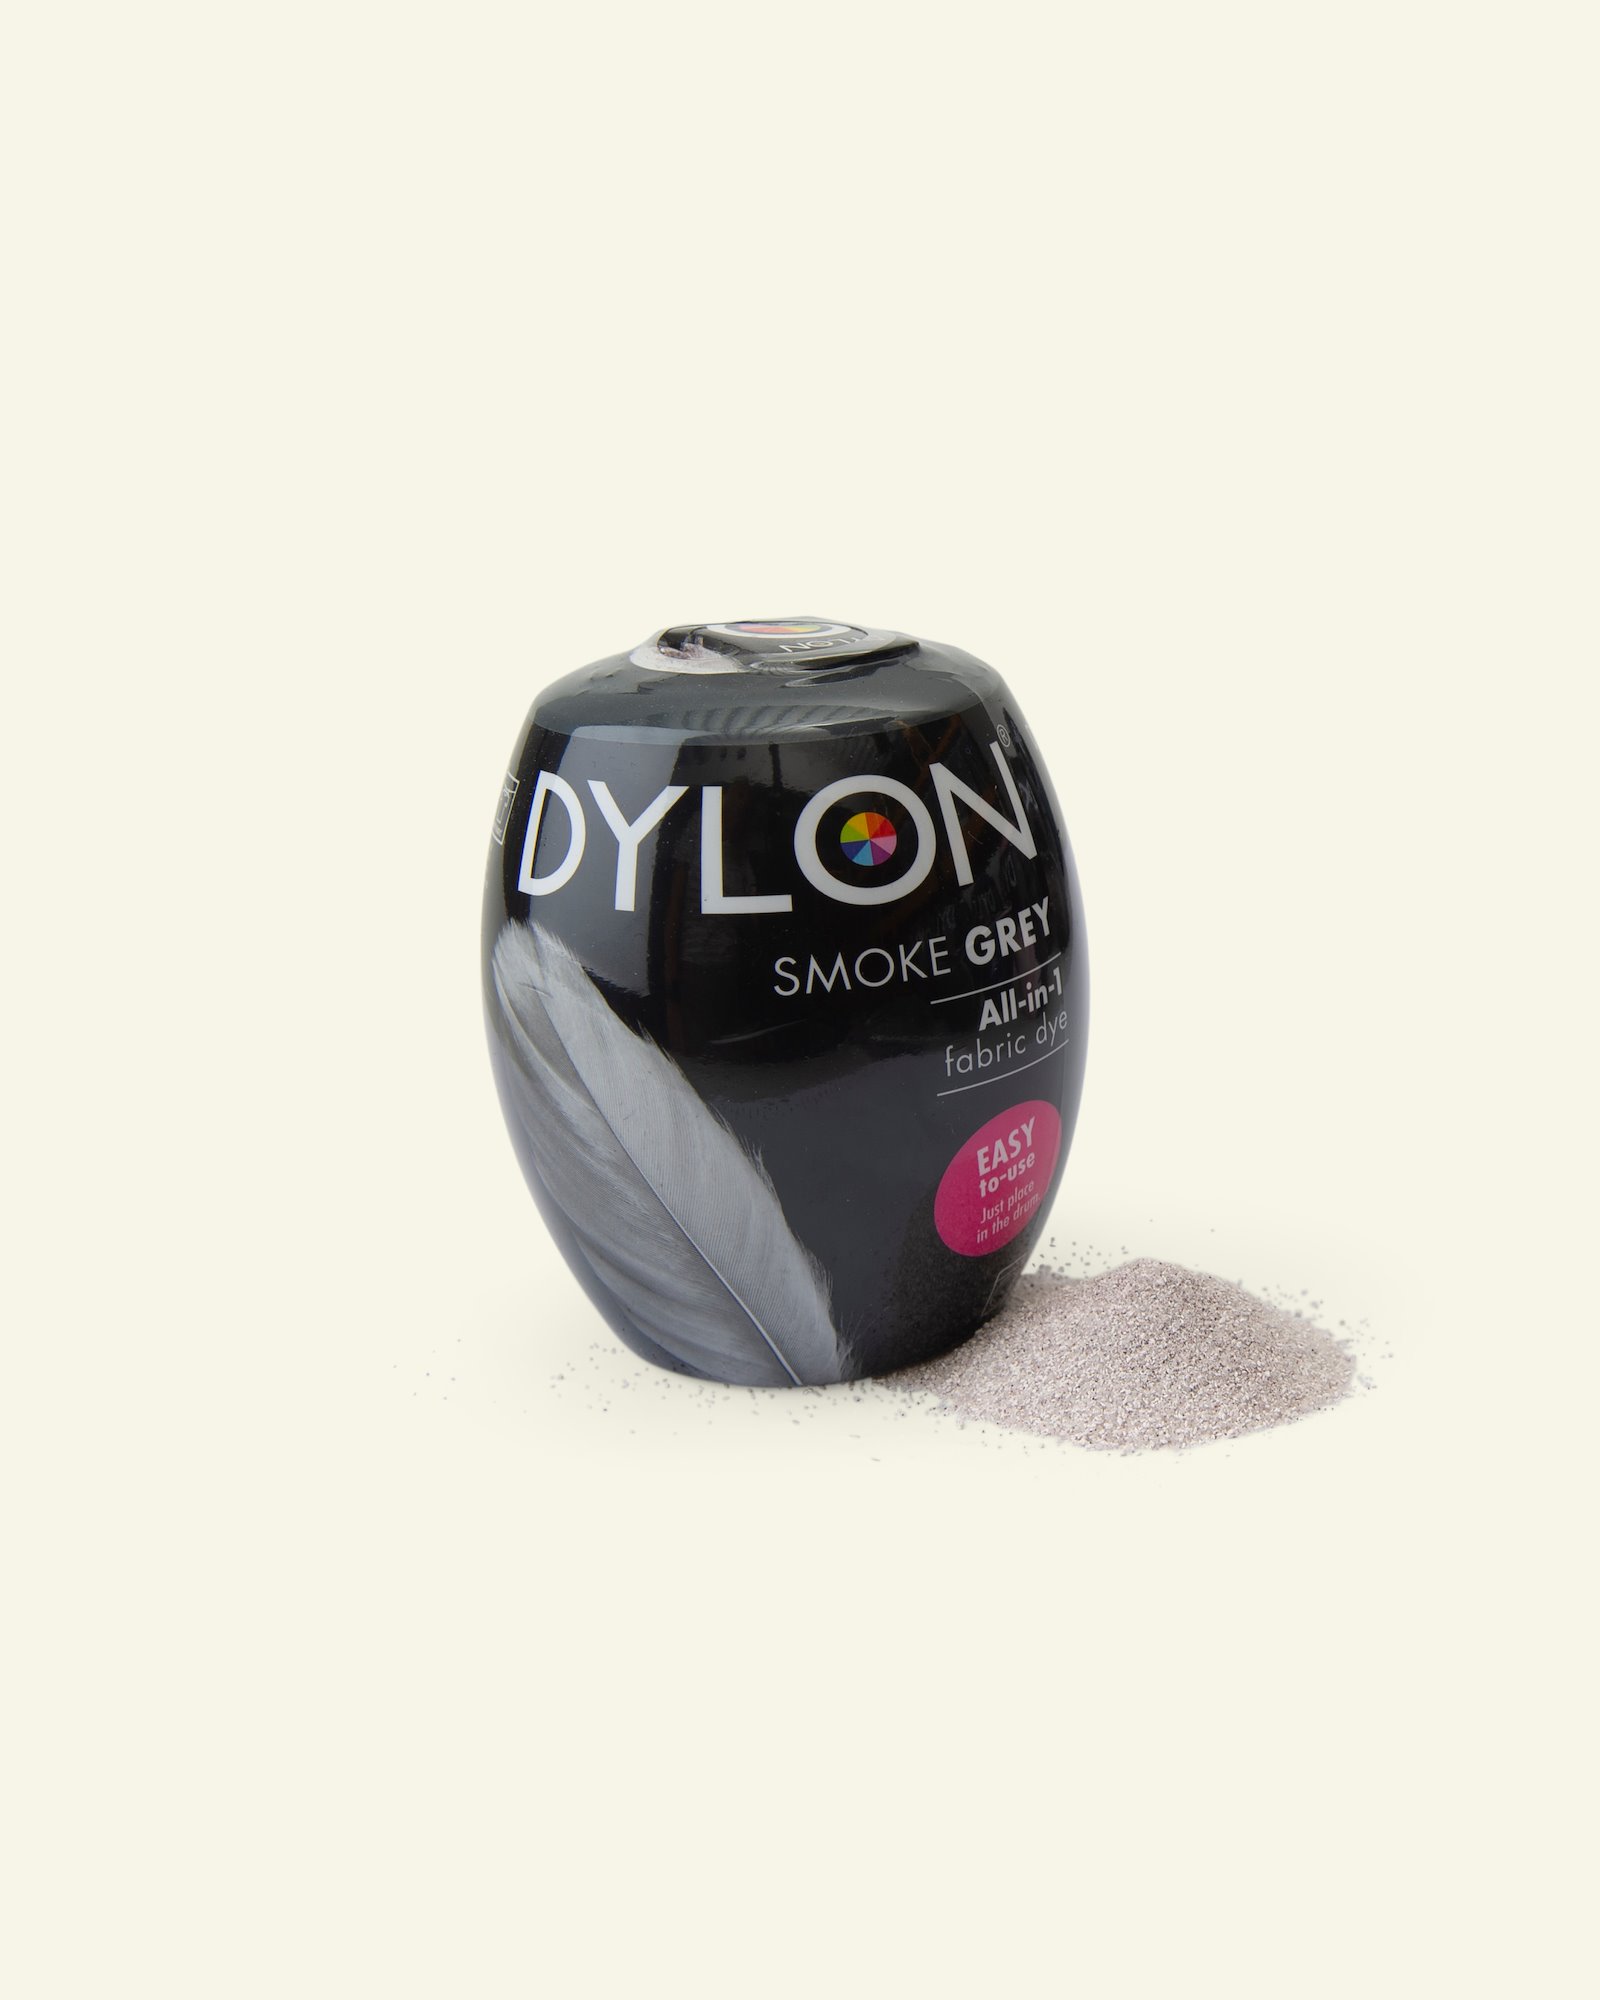 Dylon fabric dye for machine grey 29713_pack